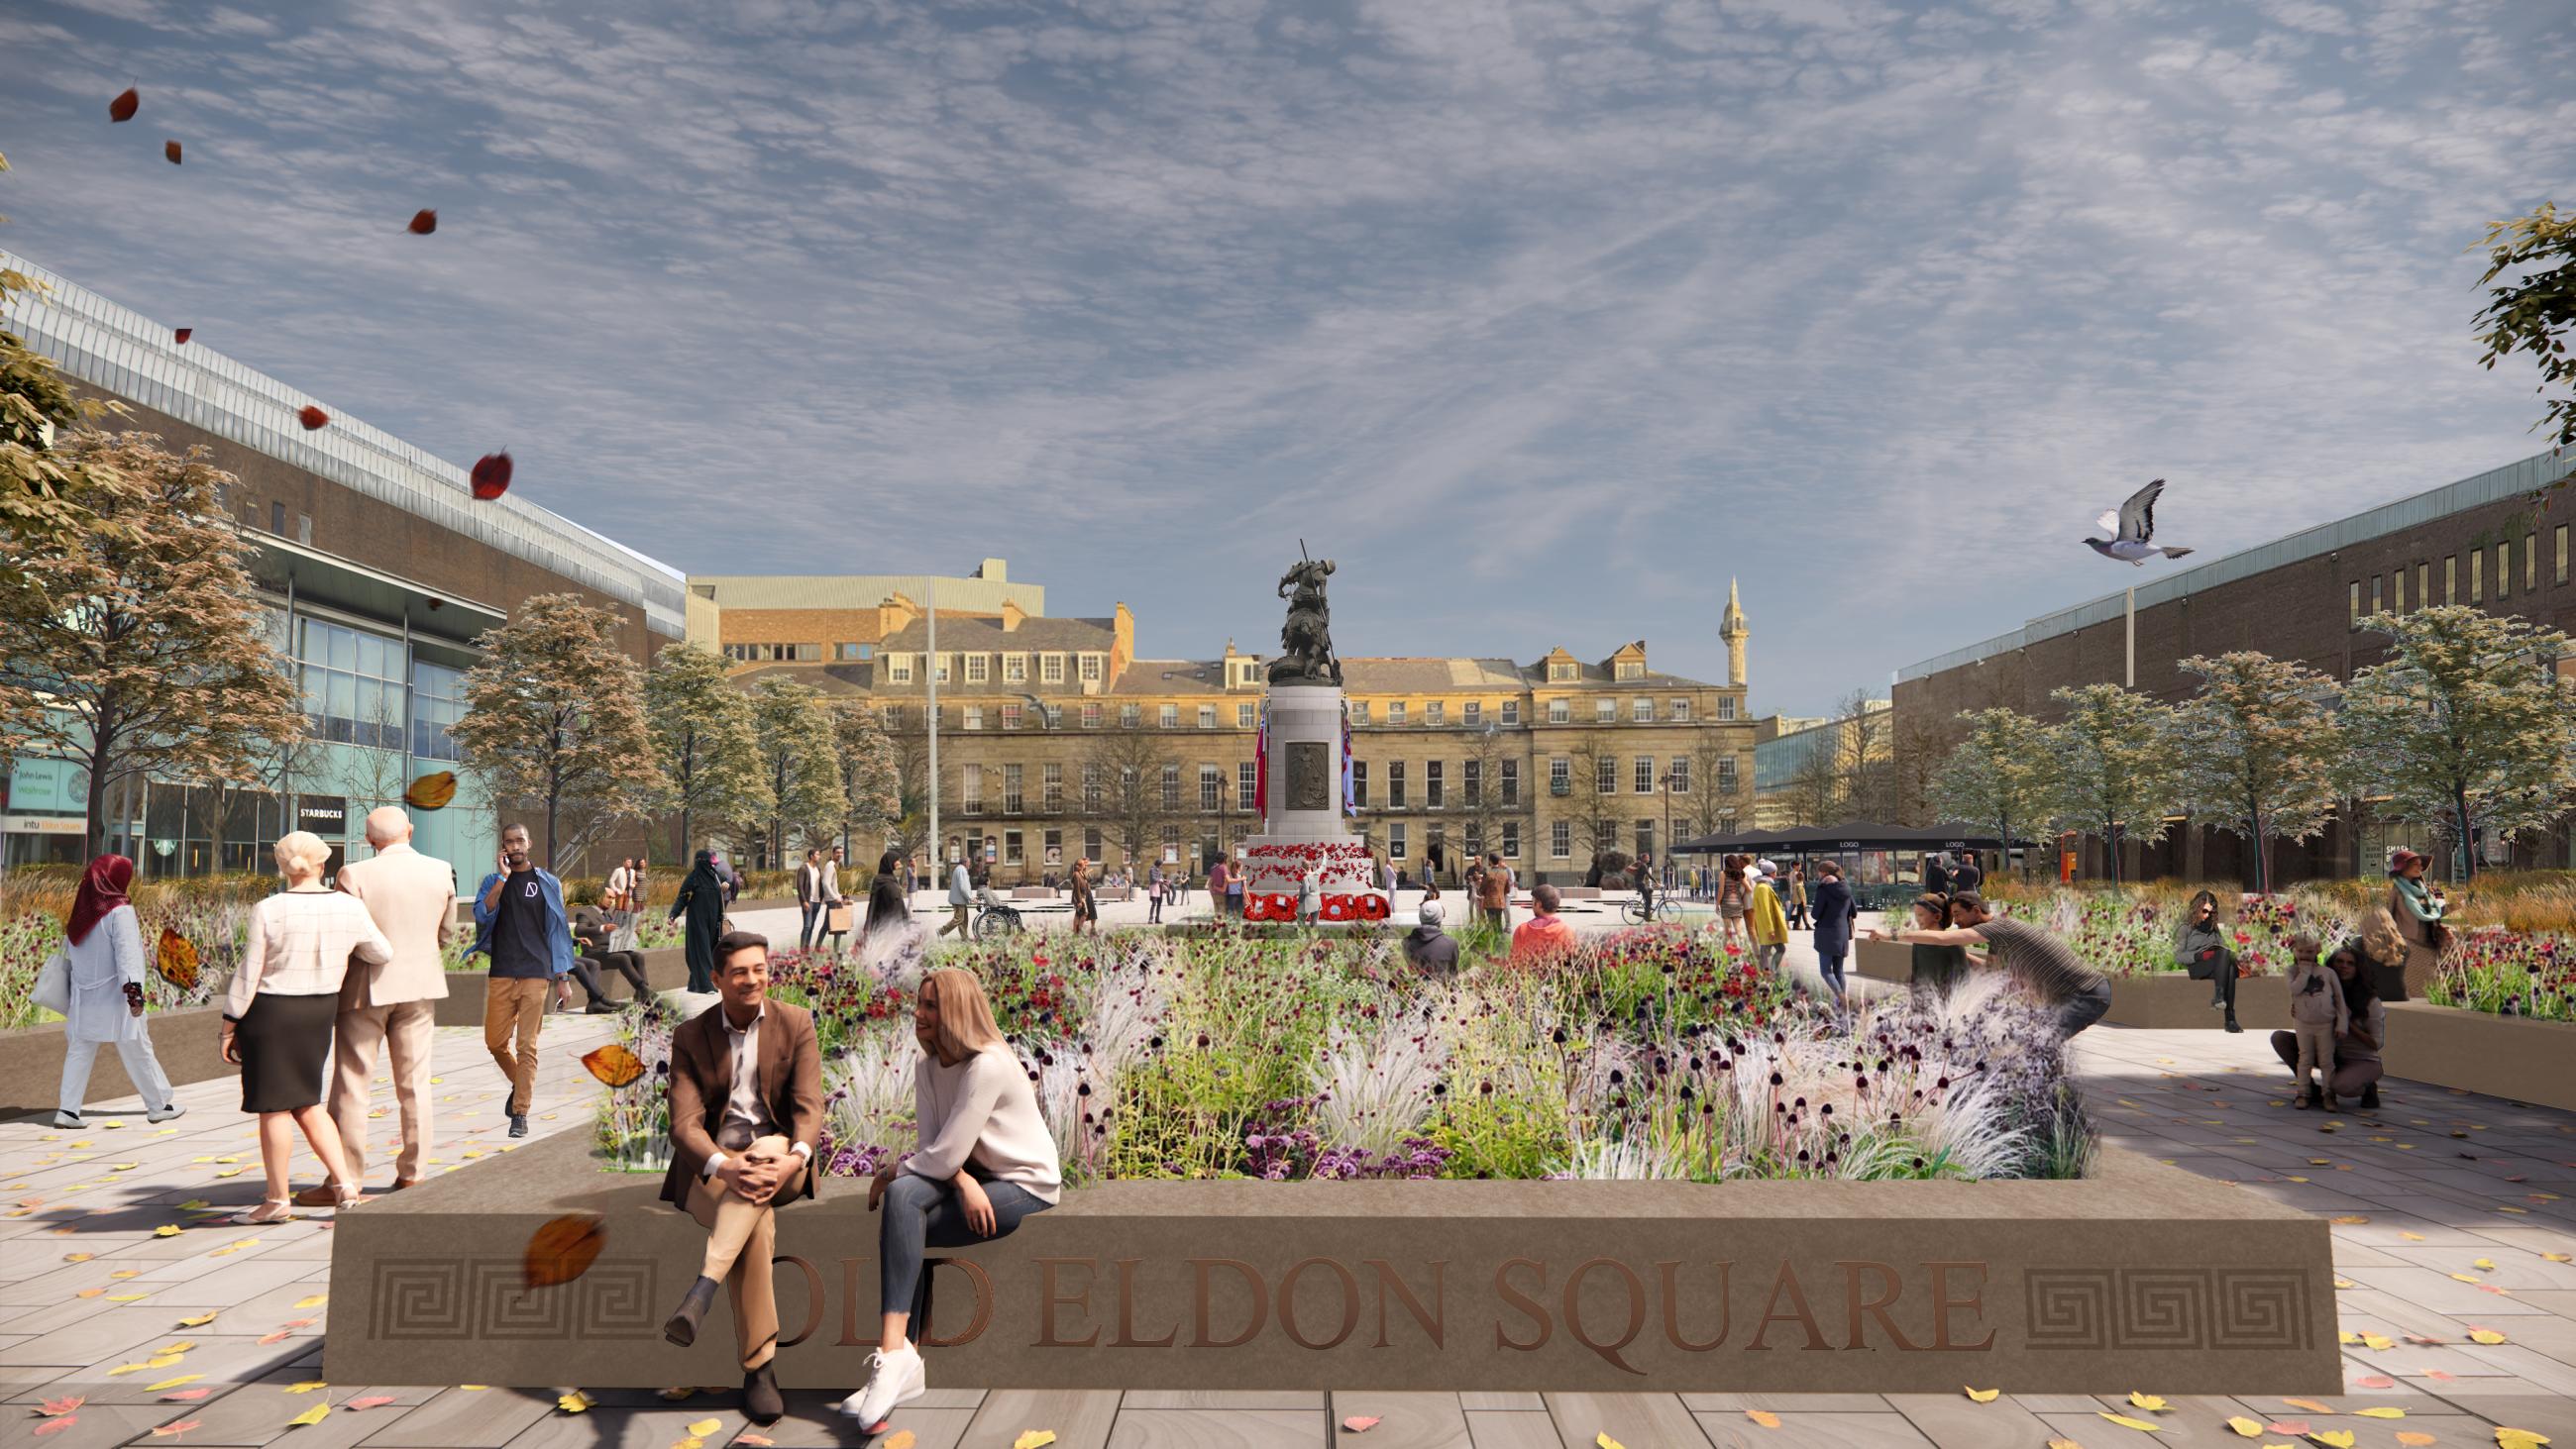 Concept design visual for Old Eldon Square